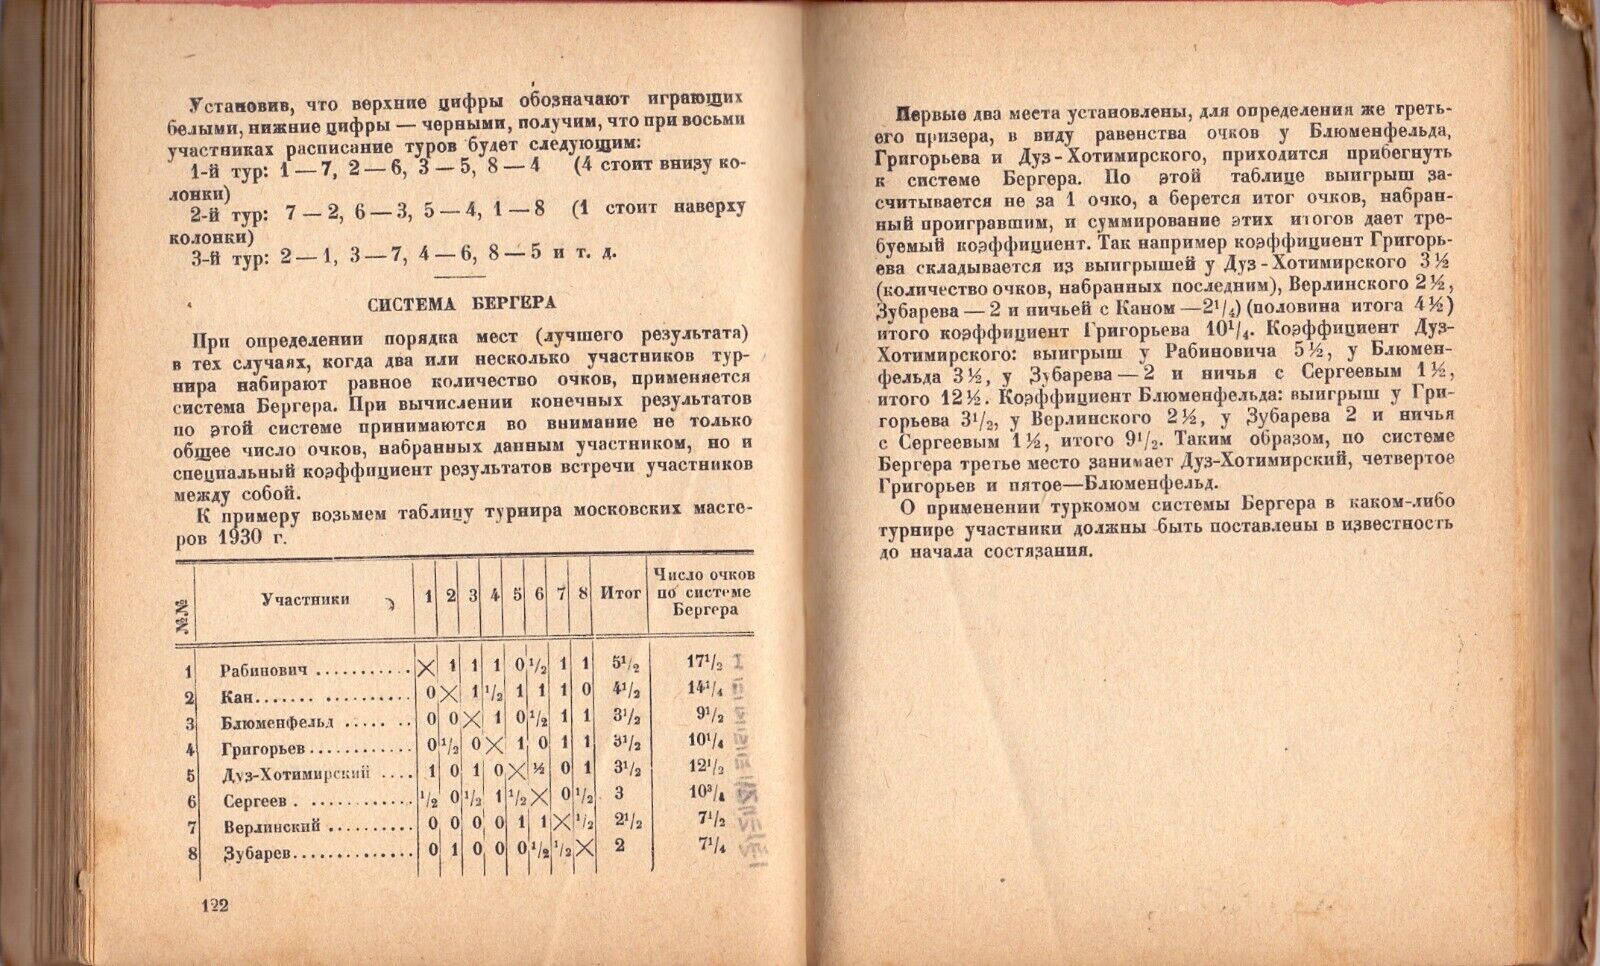 11550.Russian chess book: Weinstein S. 1932. Chess player’s companion